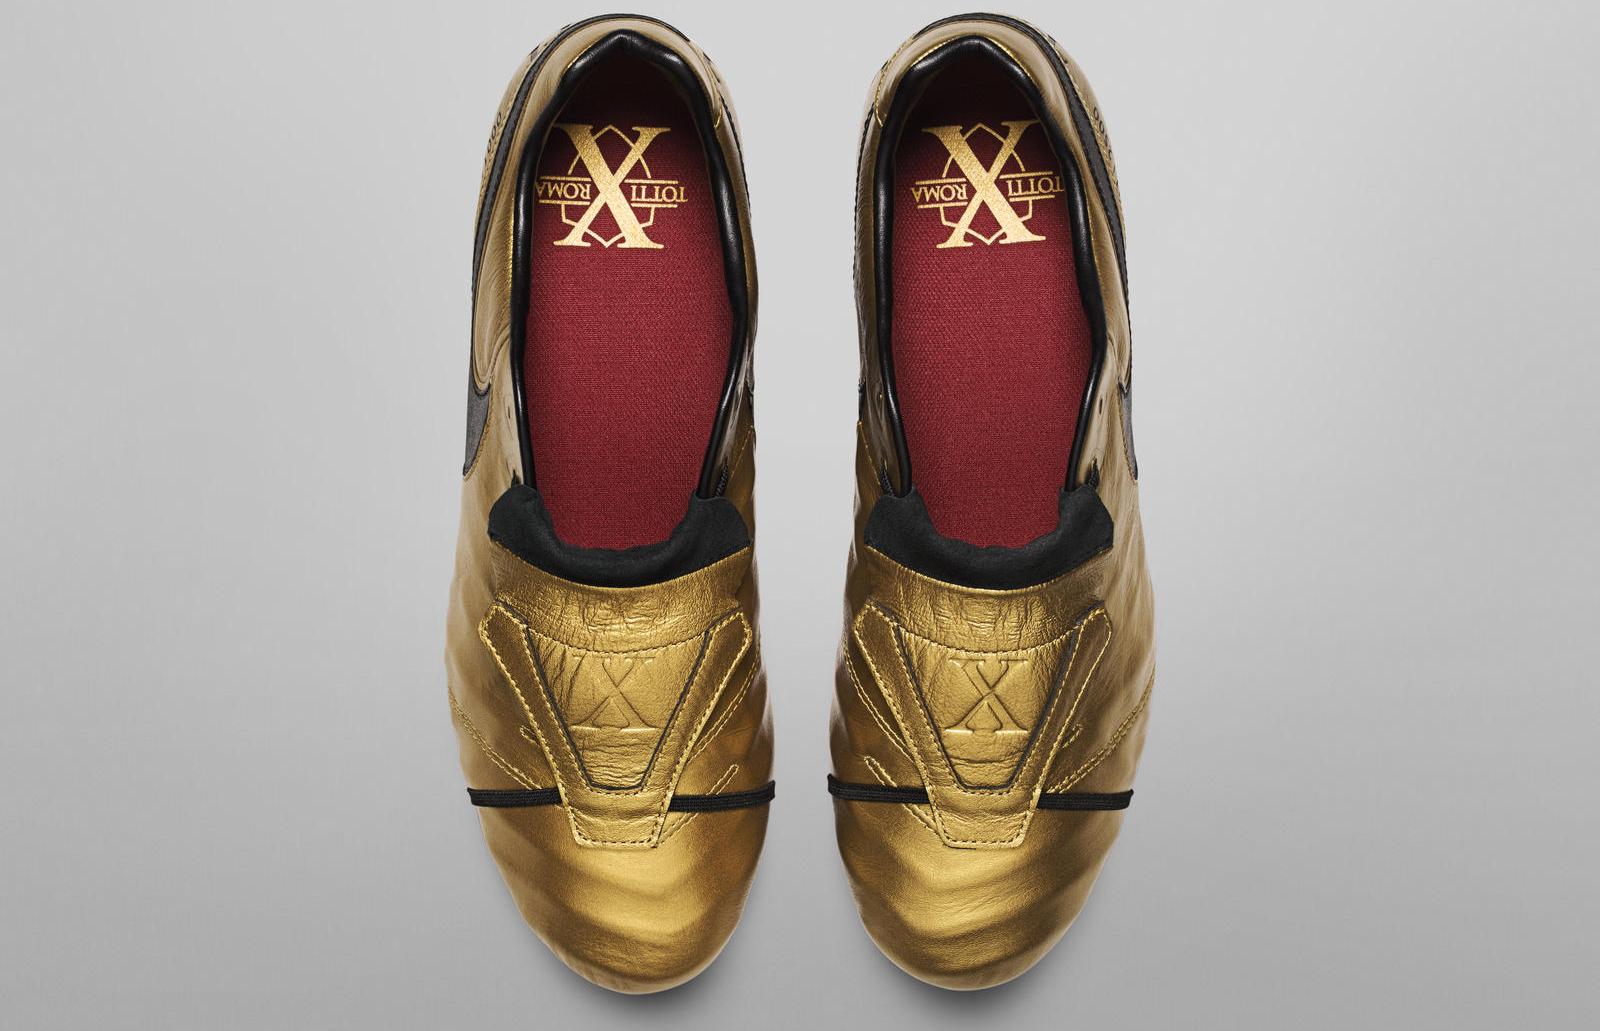 Calma Alerta crema Nike introduces limited edition Tiempo Totti X Roma boots - Luxurylaunches